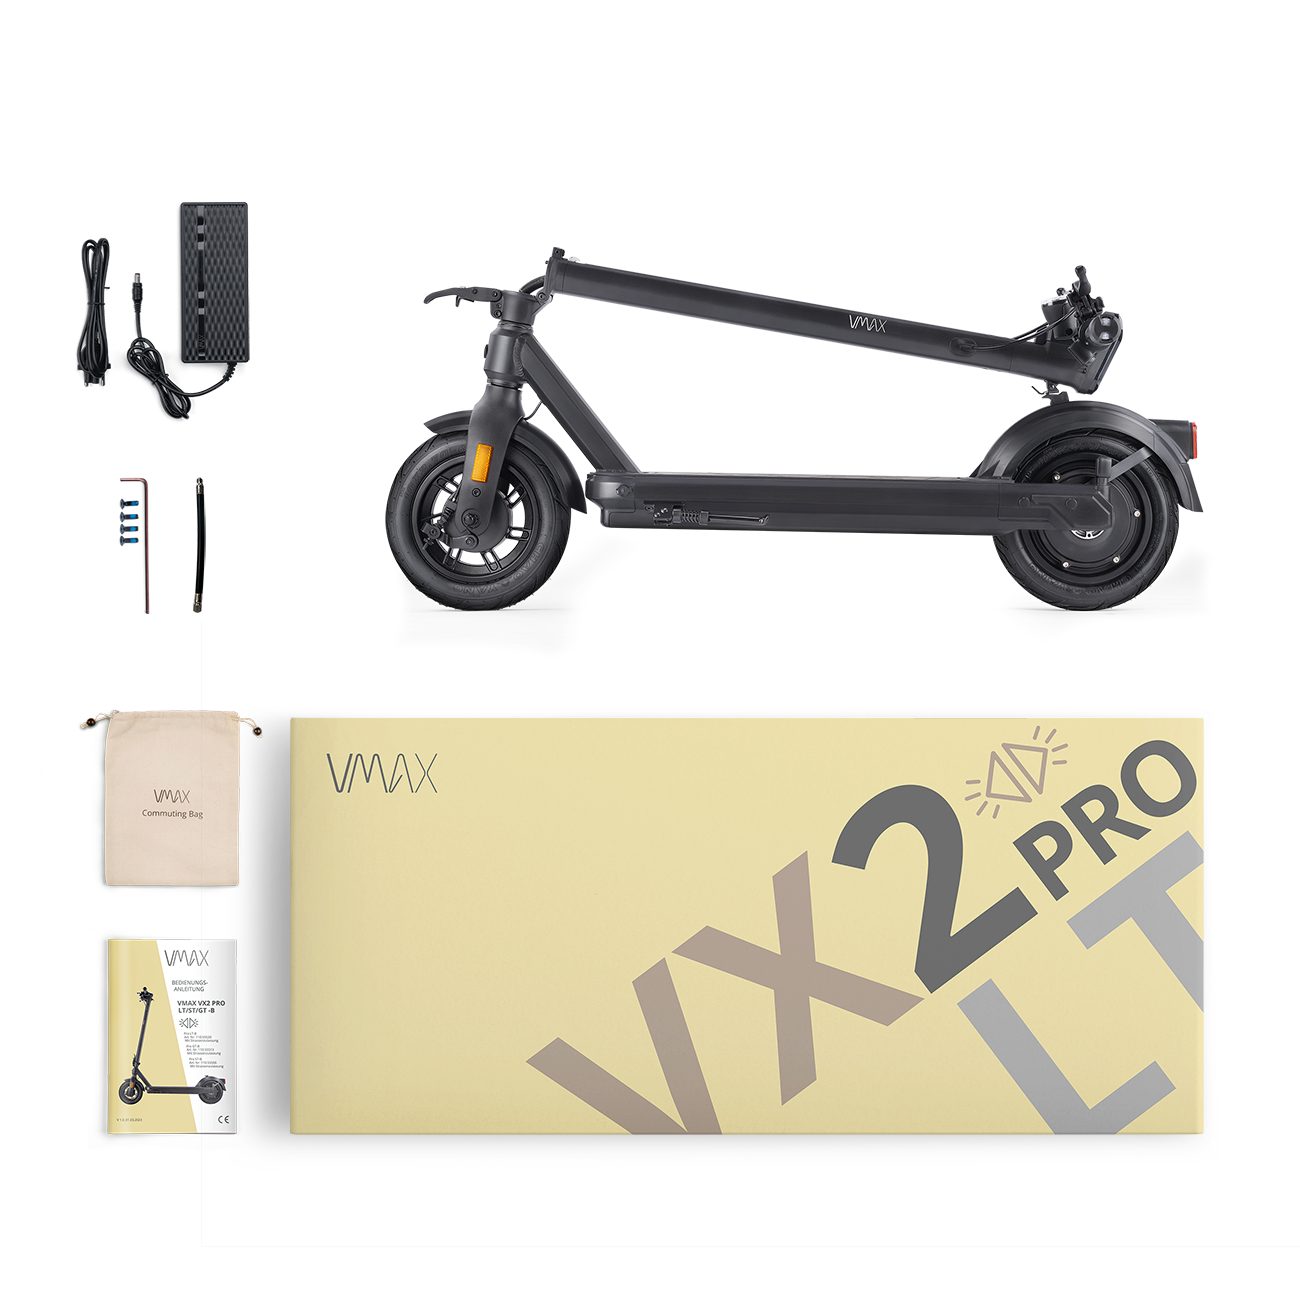 E-Scooter VX2 LT-B, VMAX 500,00 20,00 W, PRO km/h